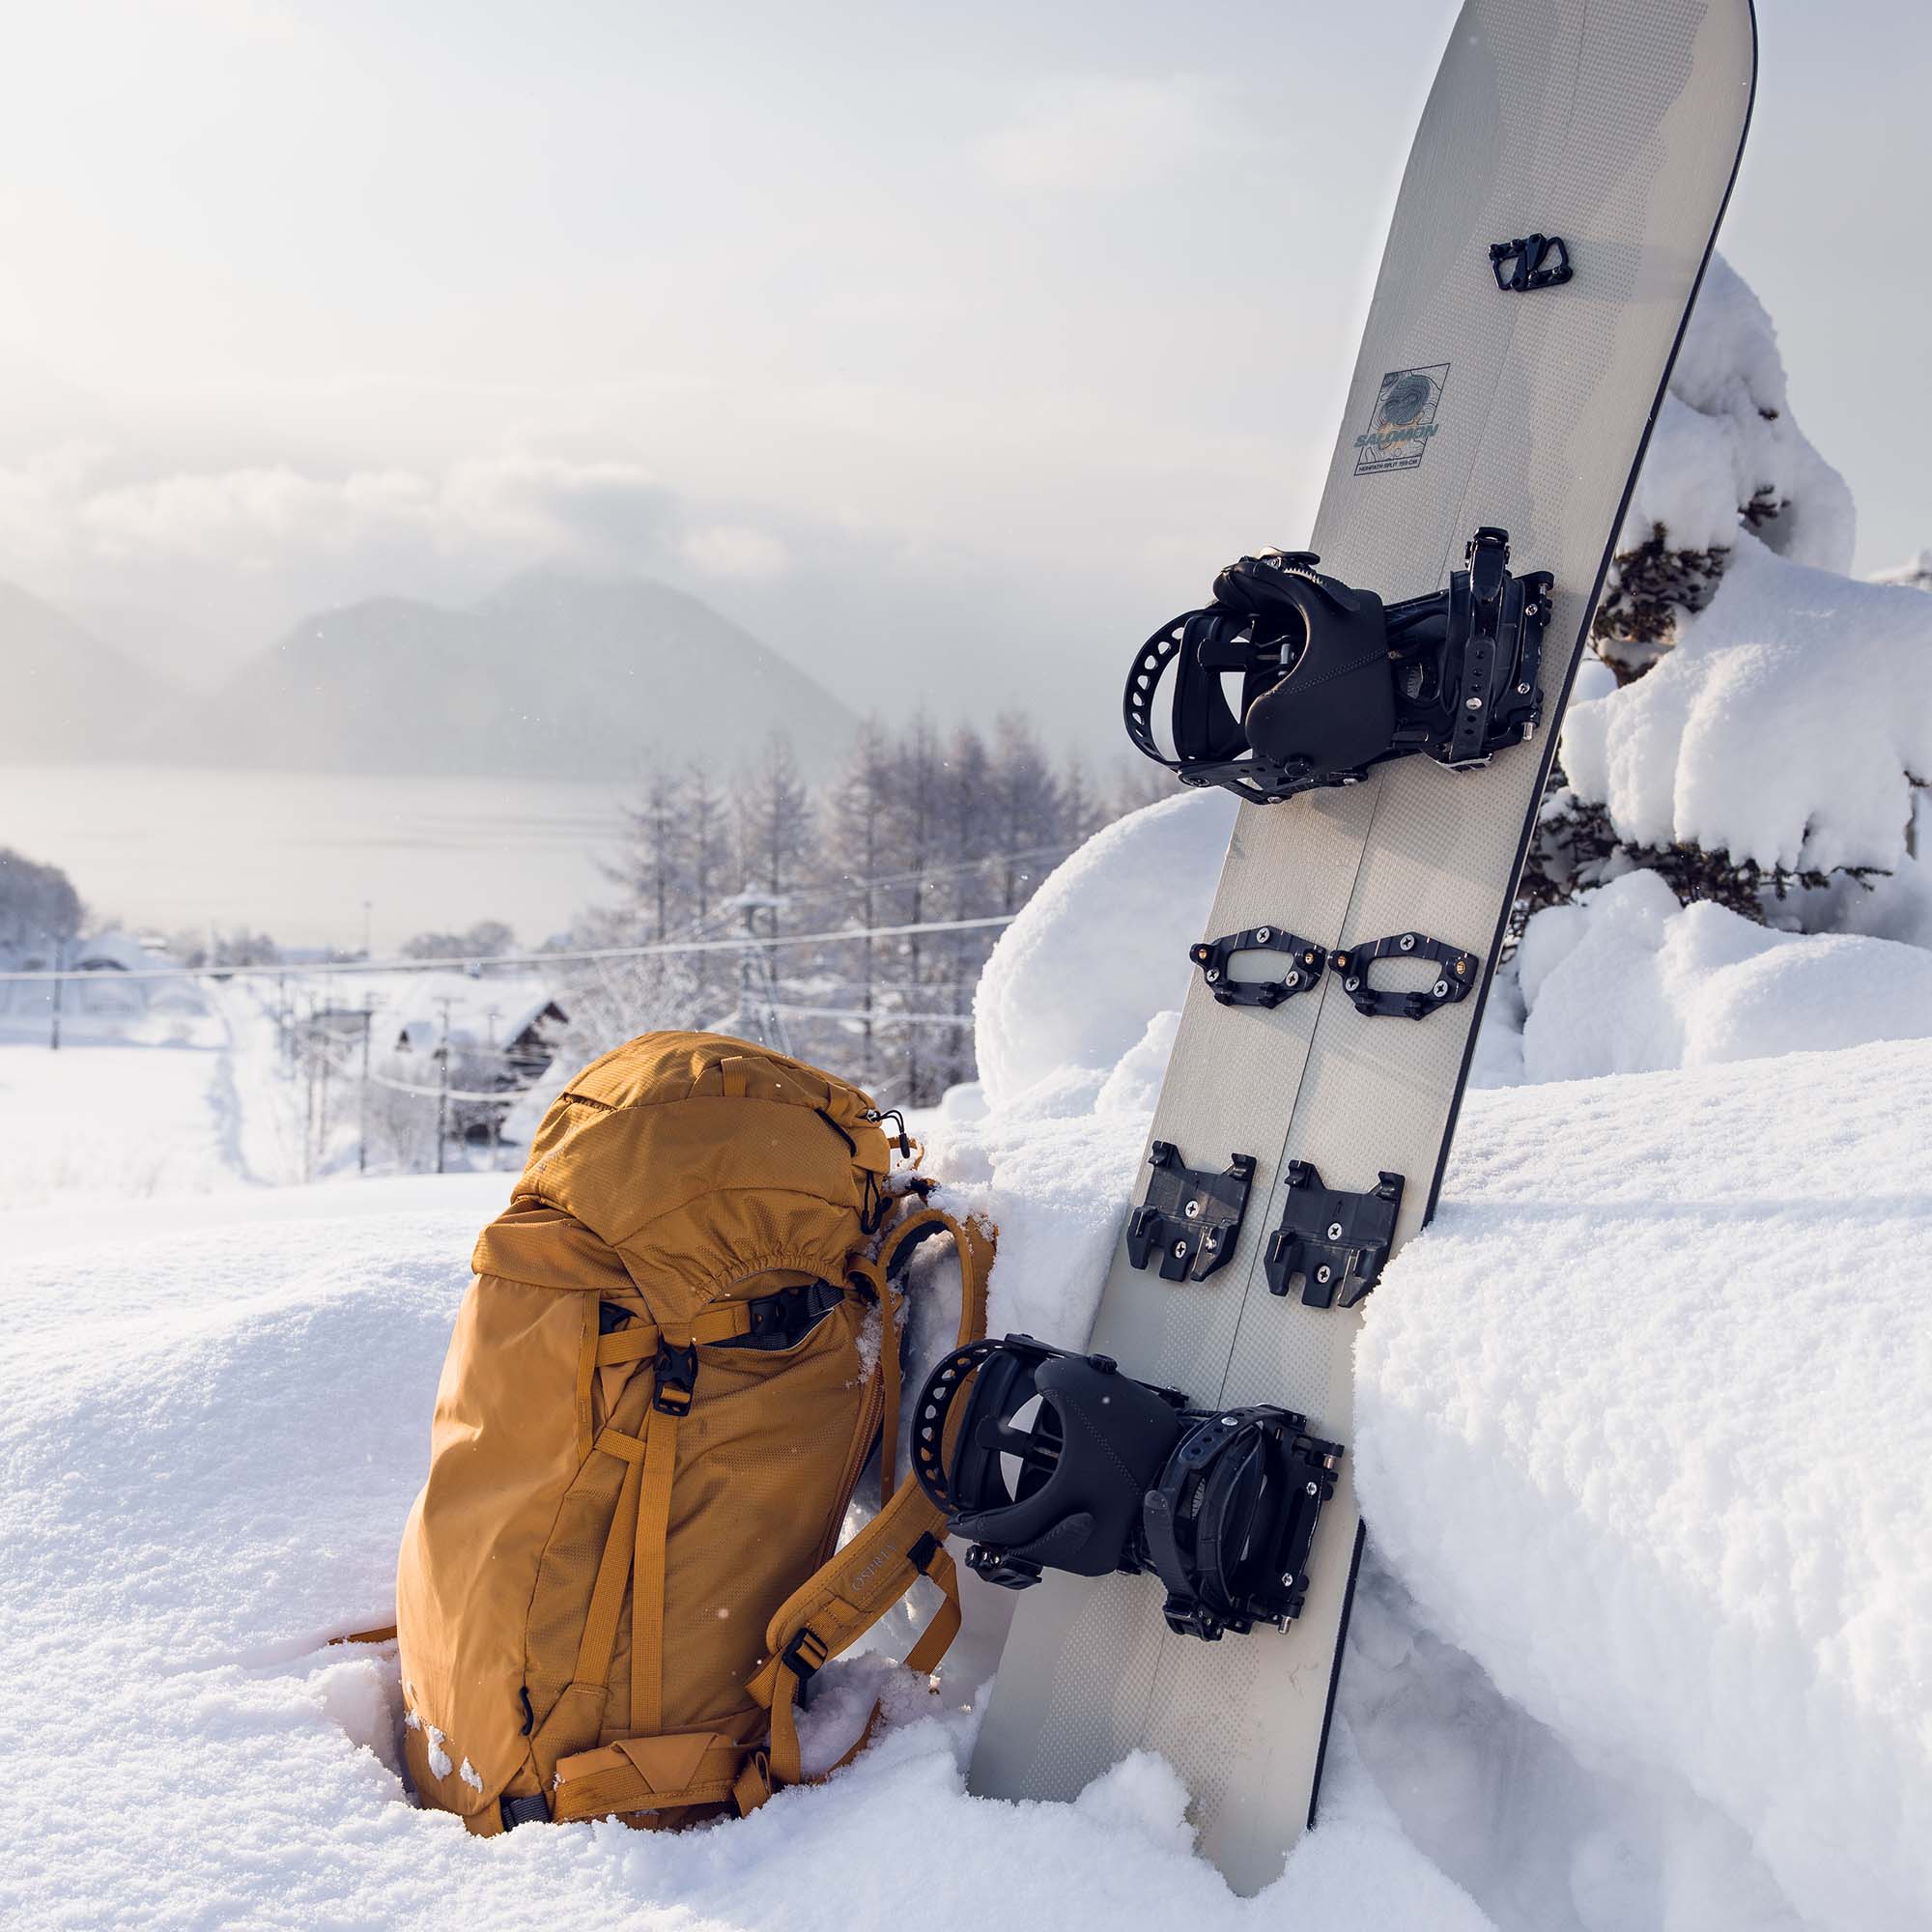 Osprey Soelden 42 Technical Ski/Snowboard Backpack